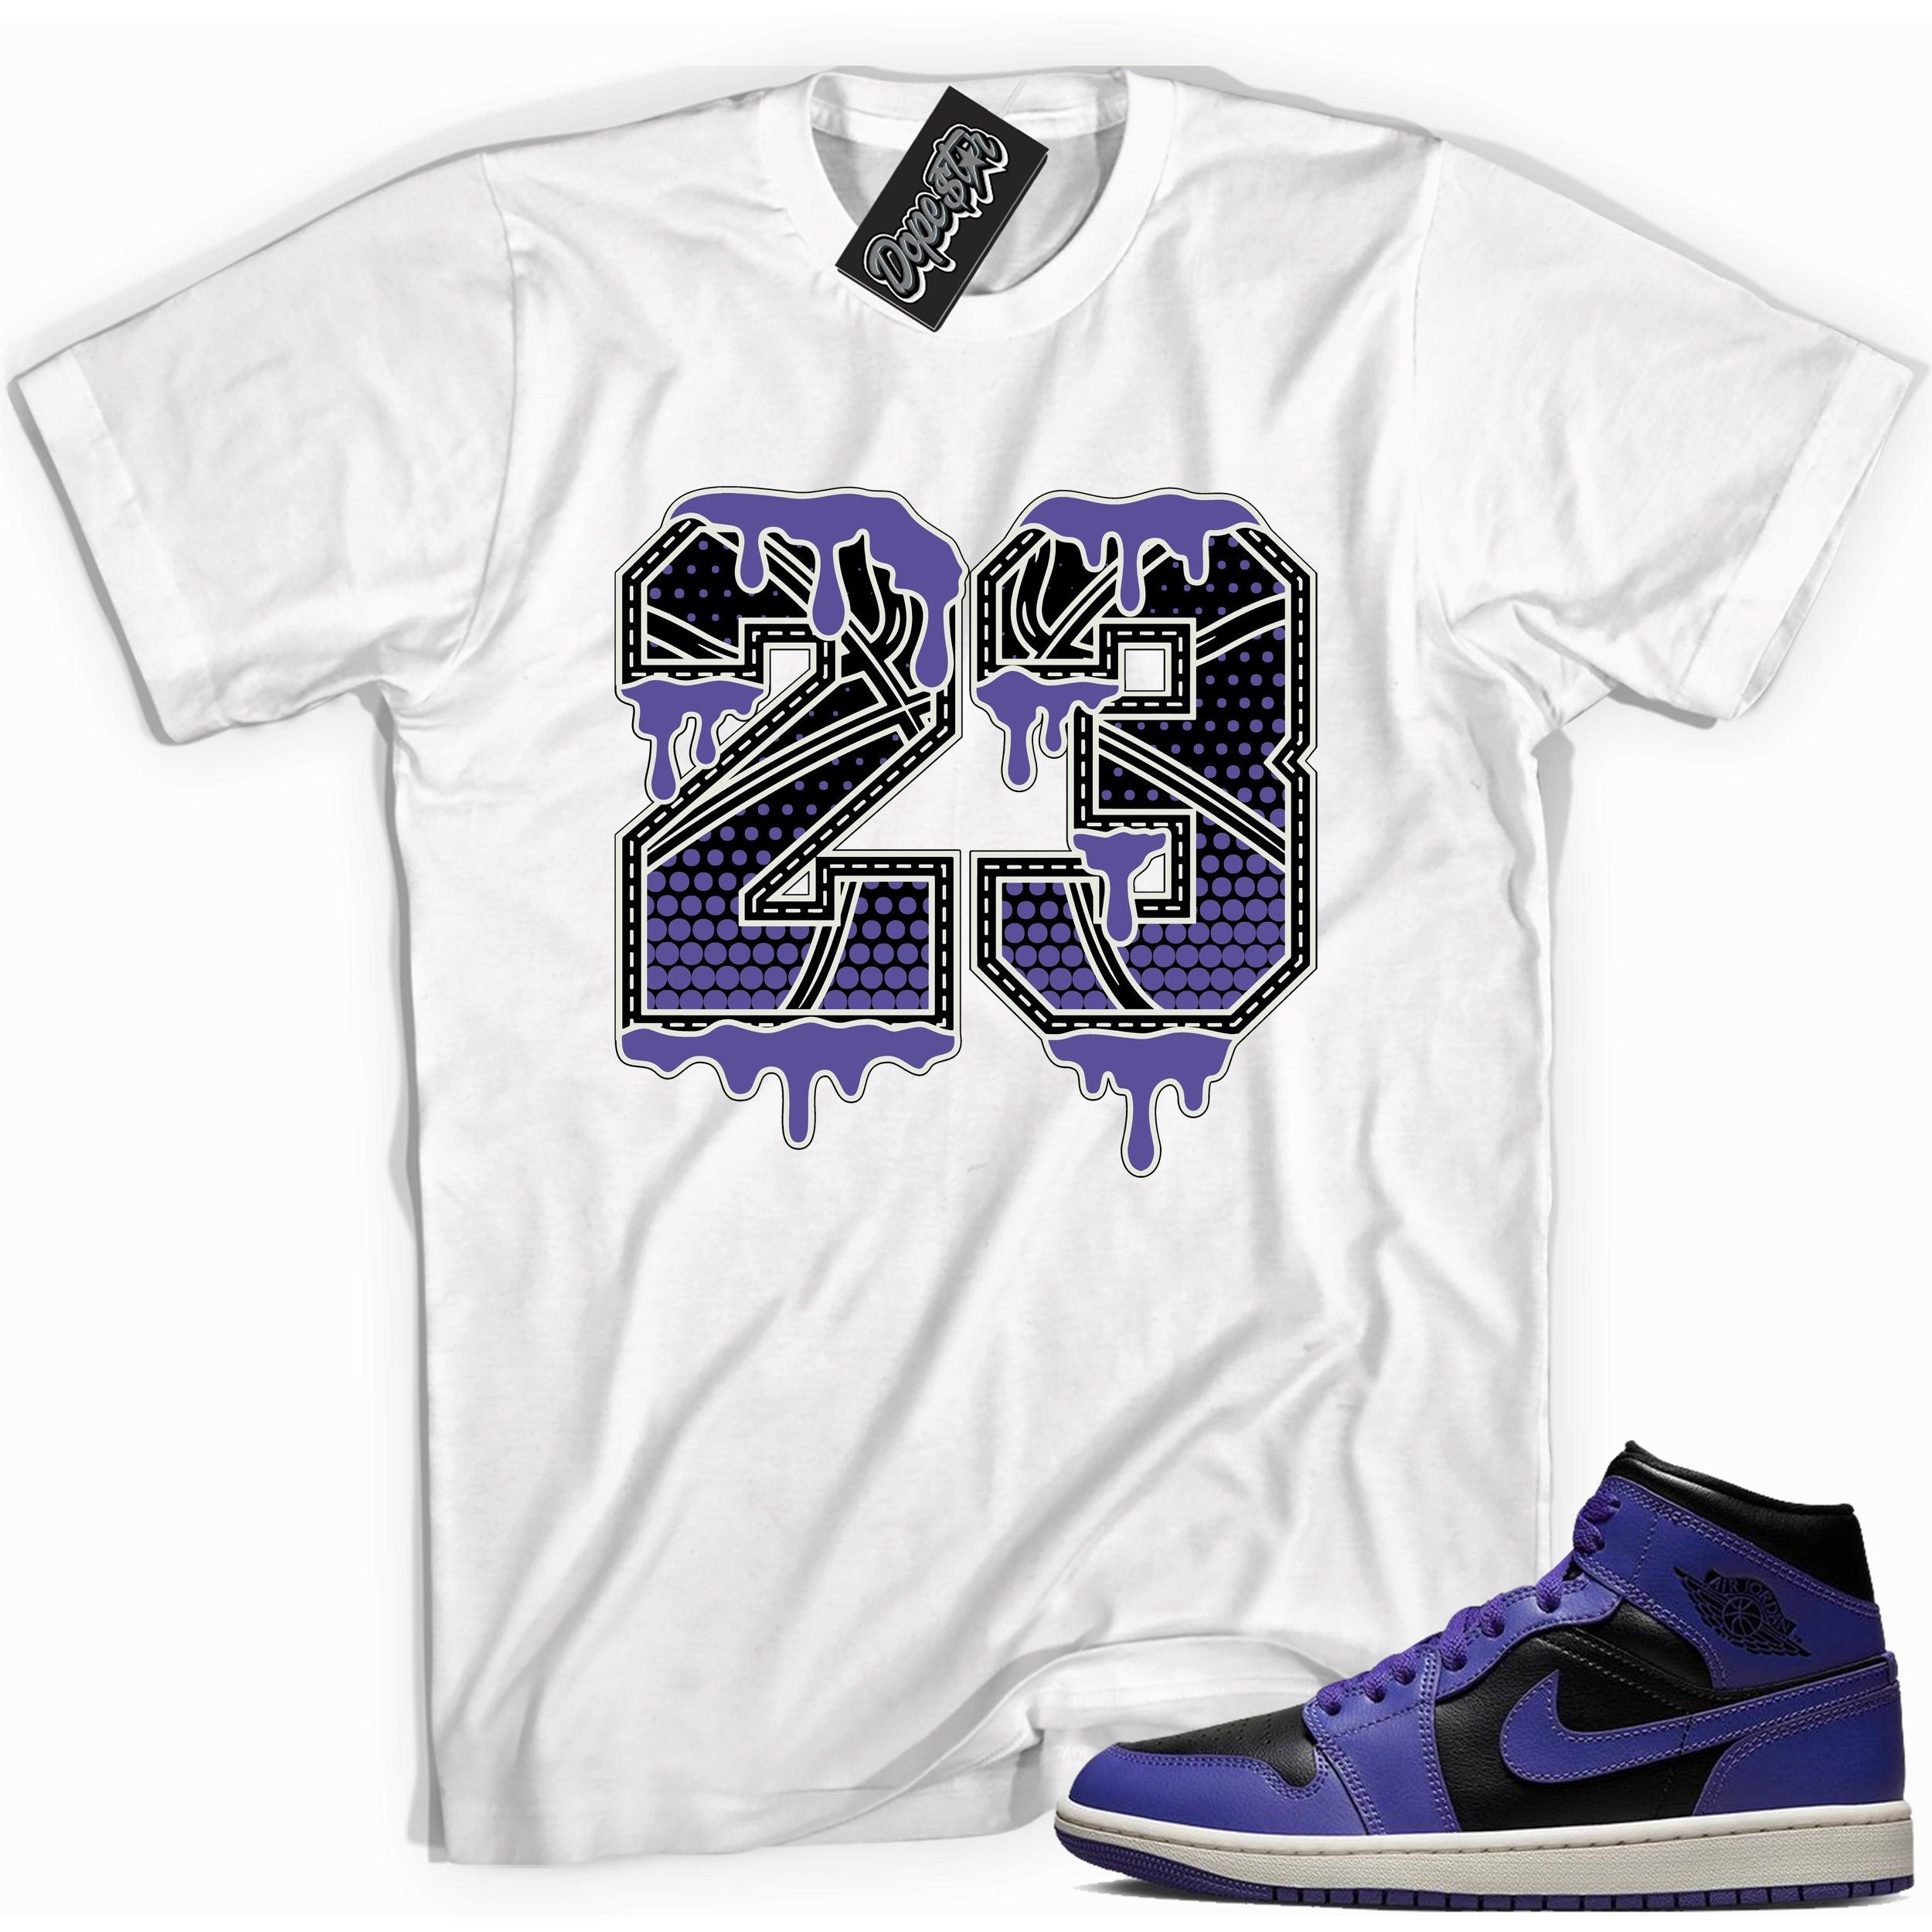 Number 23 Ball T-Shirt AJ 1 Mid Purple Black photo 